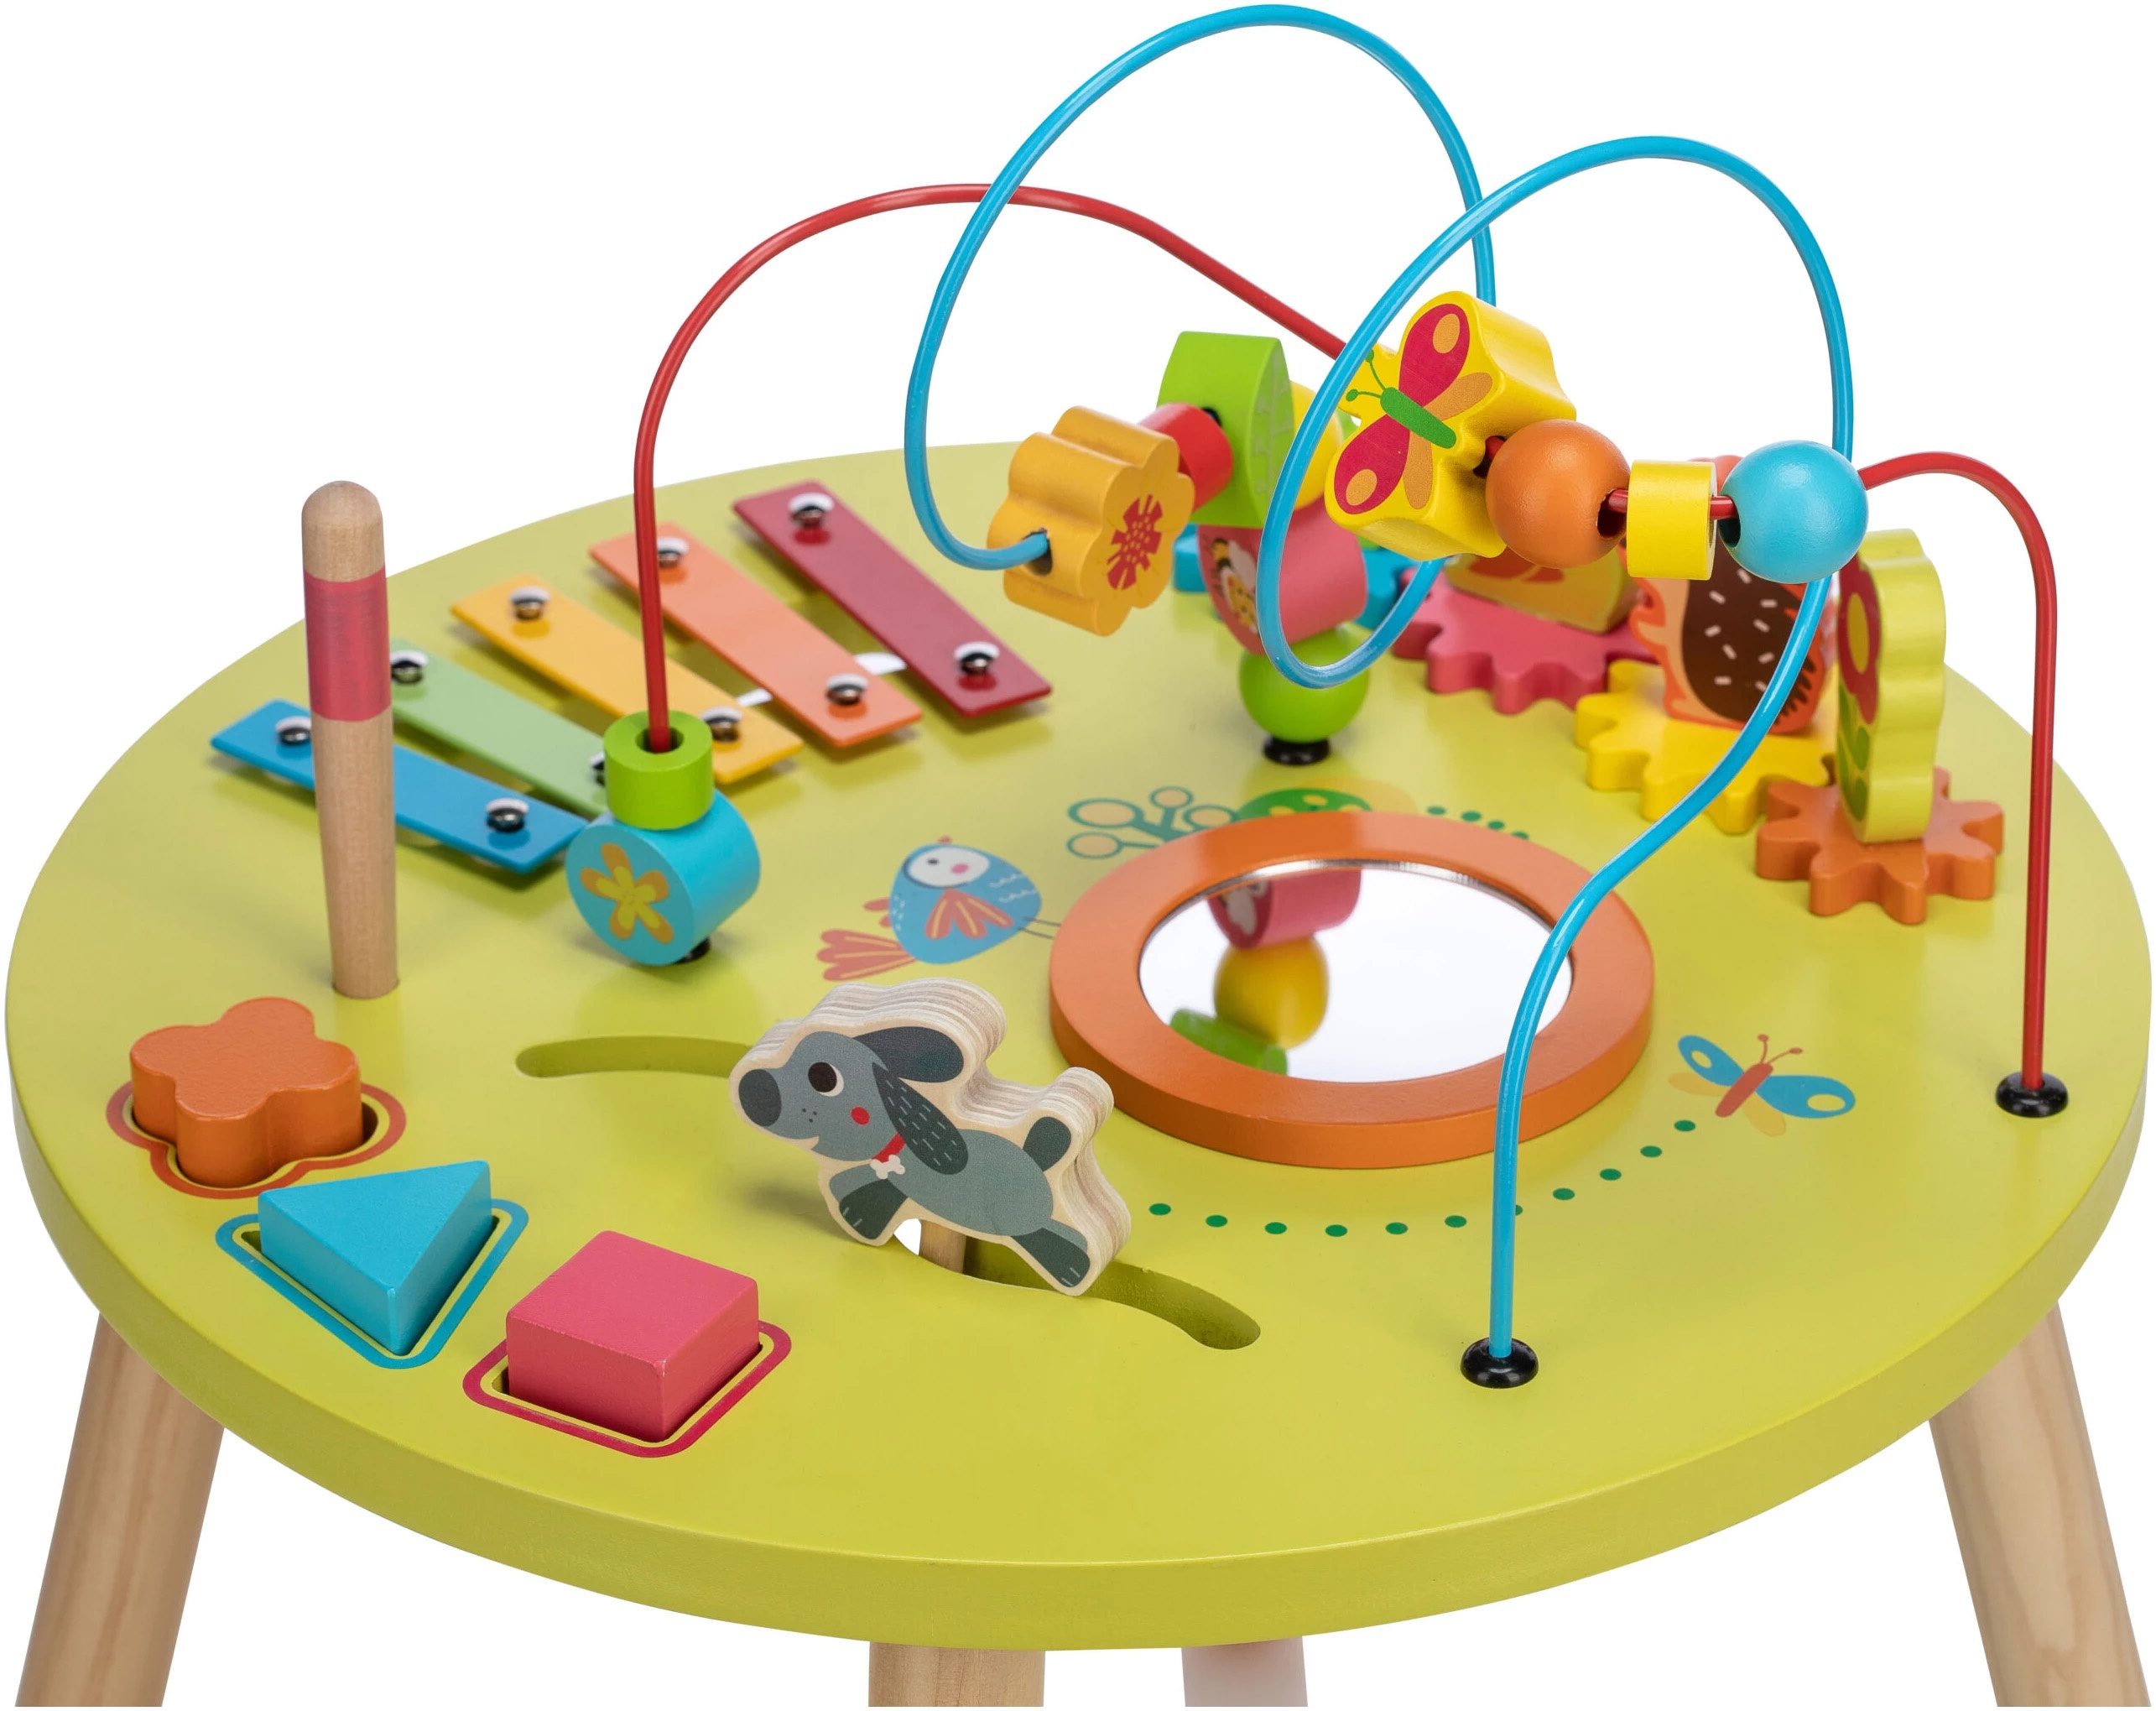 Фотография 1 товарной позиции интернет-магазина детских игрушек www.smarttoys.com.ua Інтерактивний стіл Free2Play дерев`яний Playzone